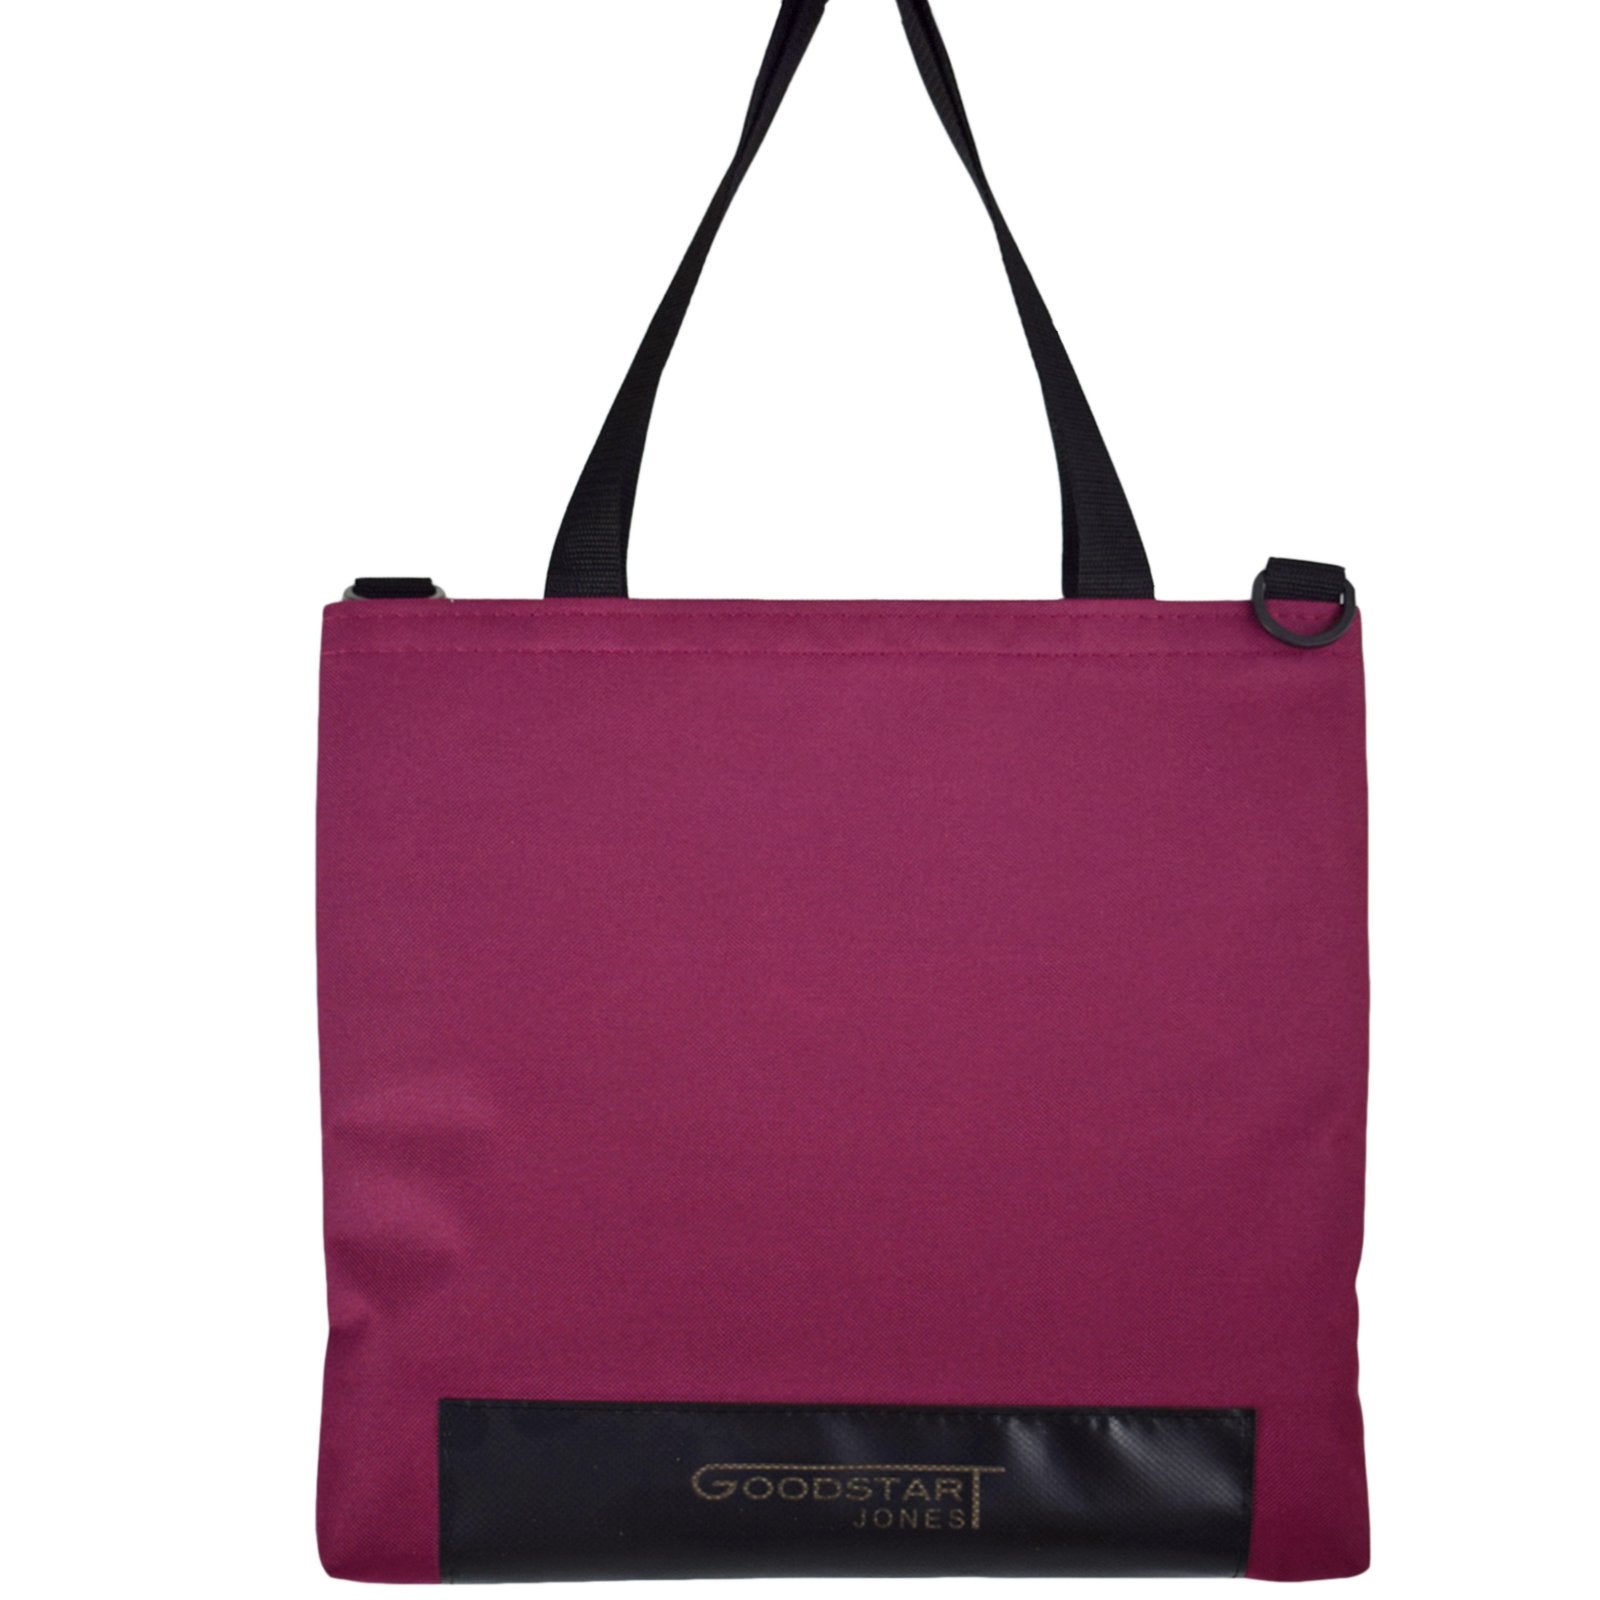 Goodstart Jones Tote bag burgundy wine color 